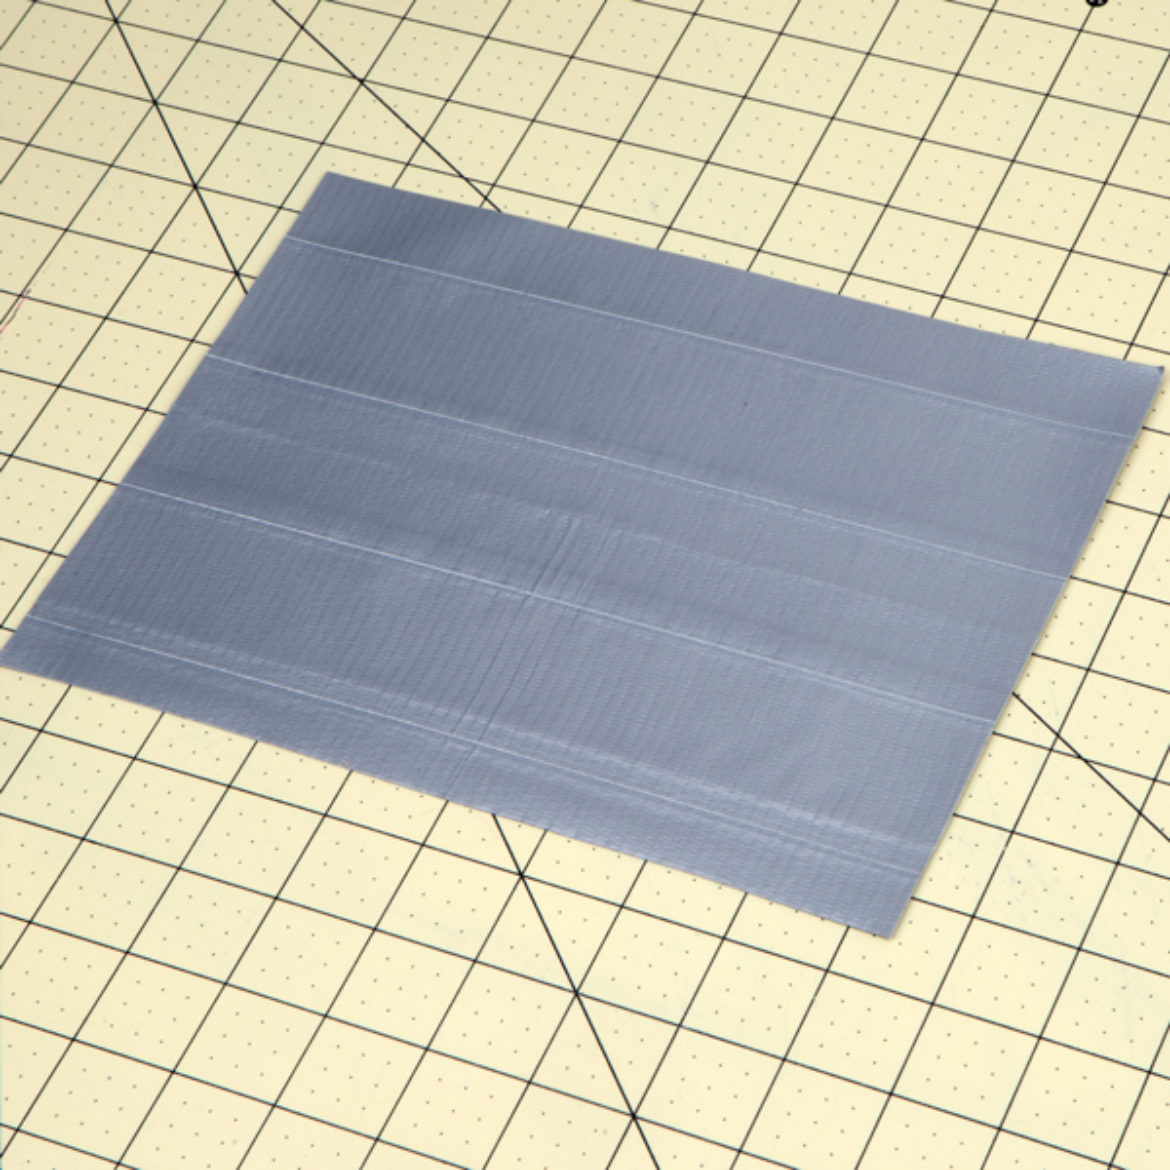 Duck Tape fabric sheet